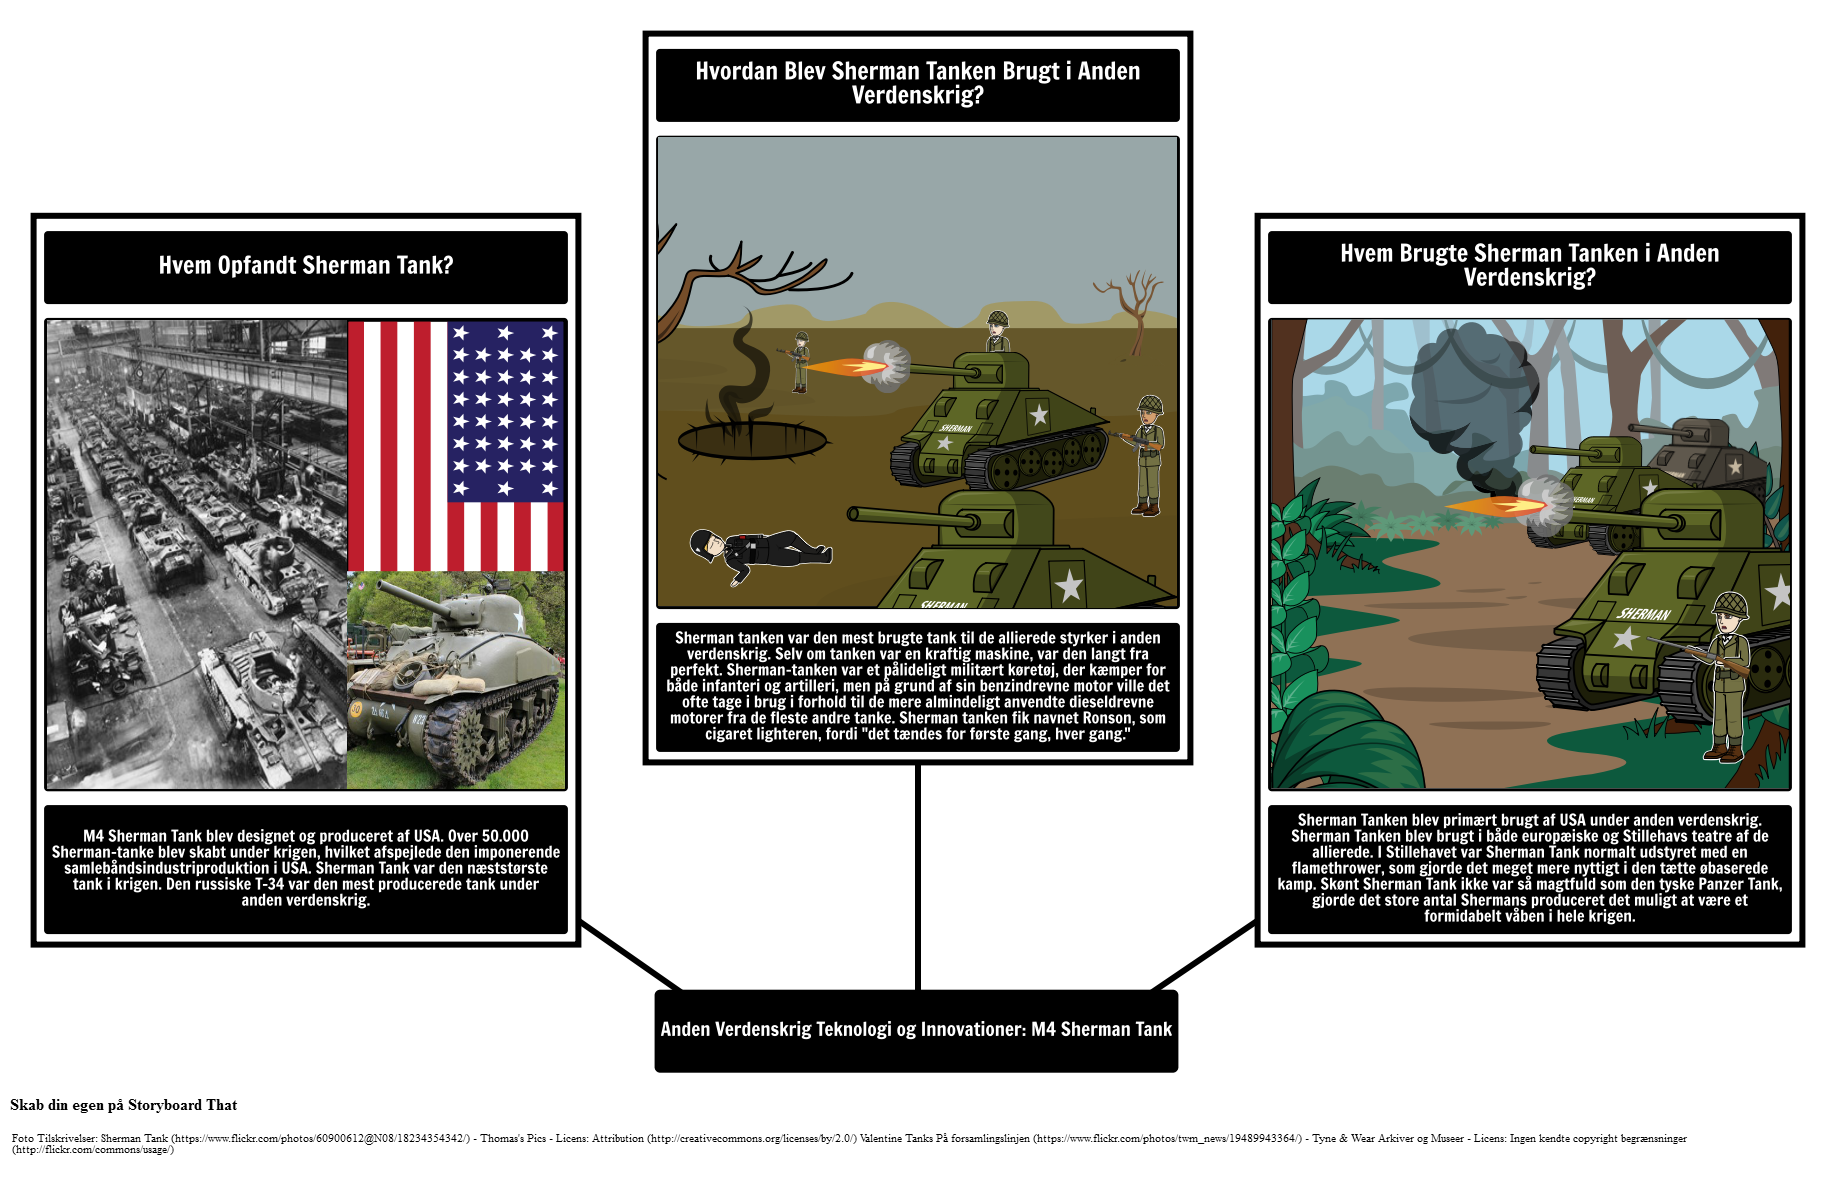 Anden Verdenskrig Teknologi og Innovationer: M4 Sherman Tank